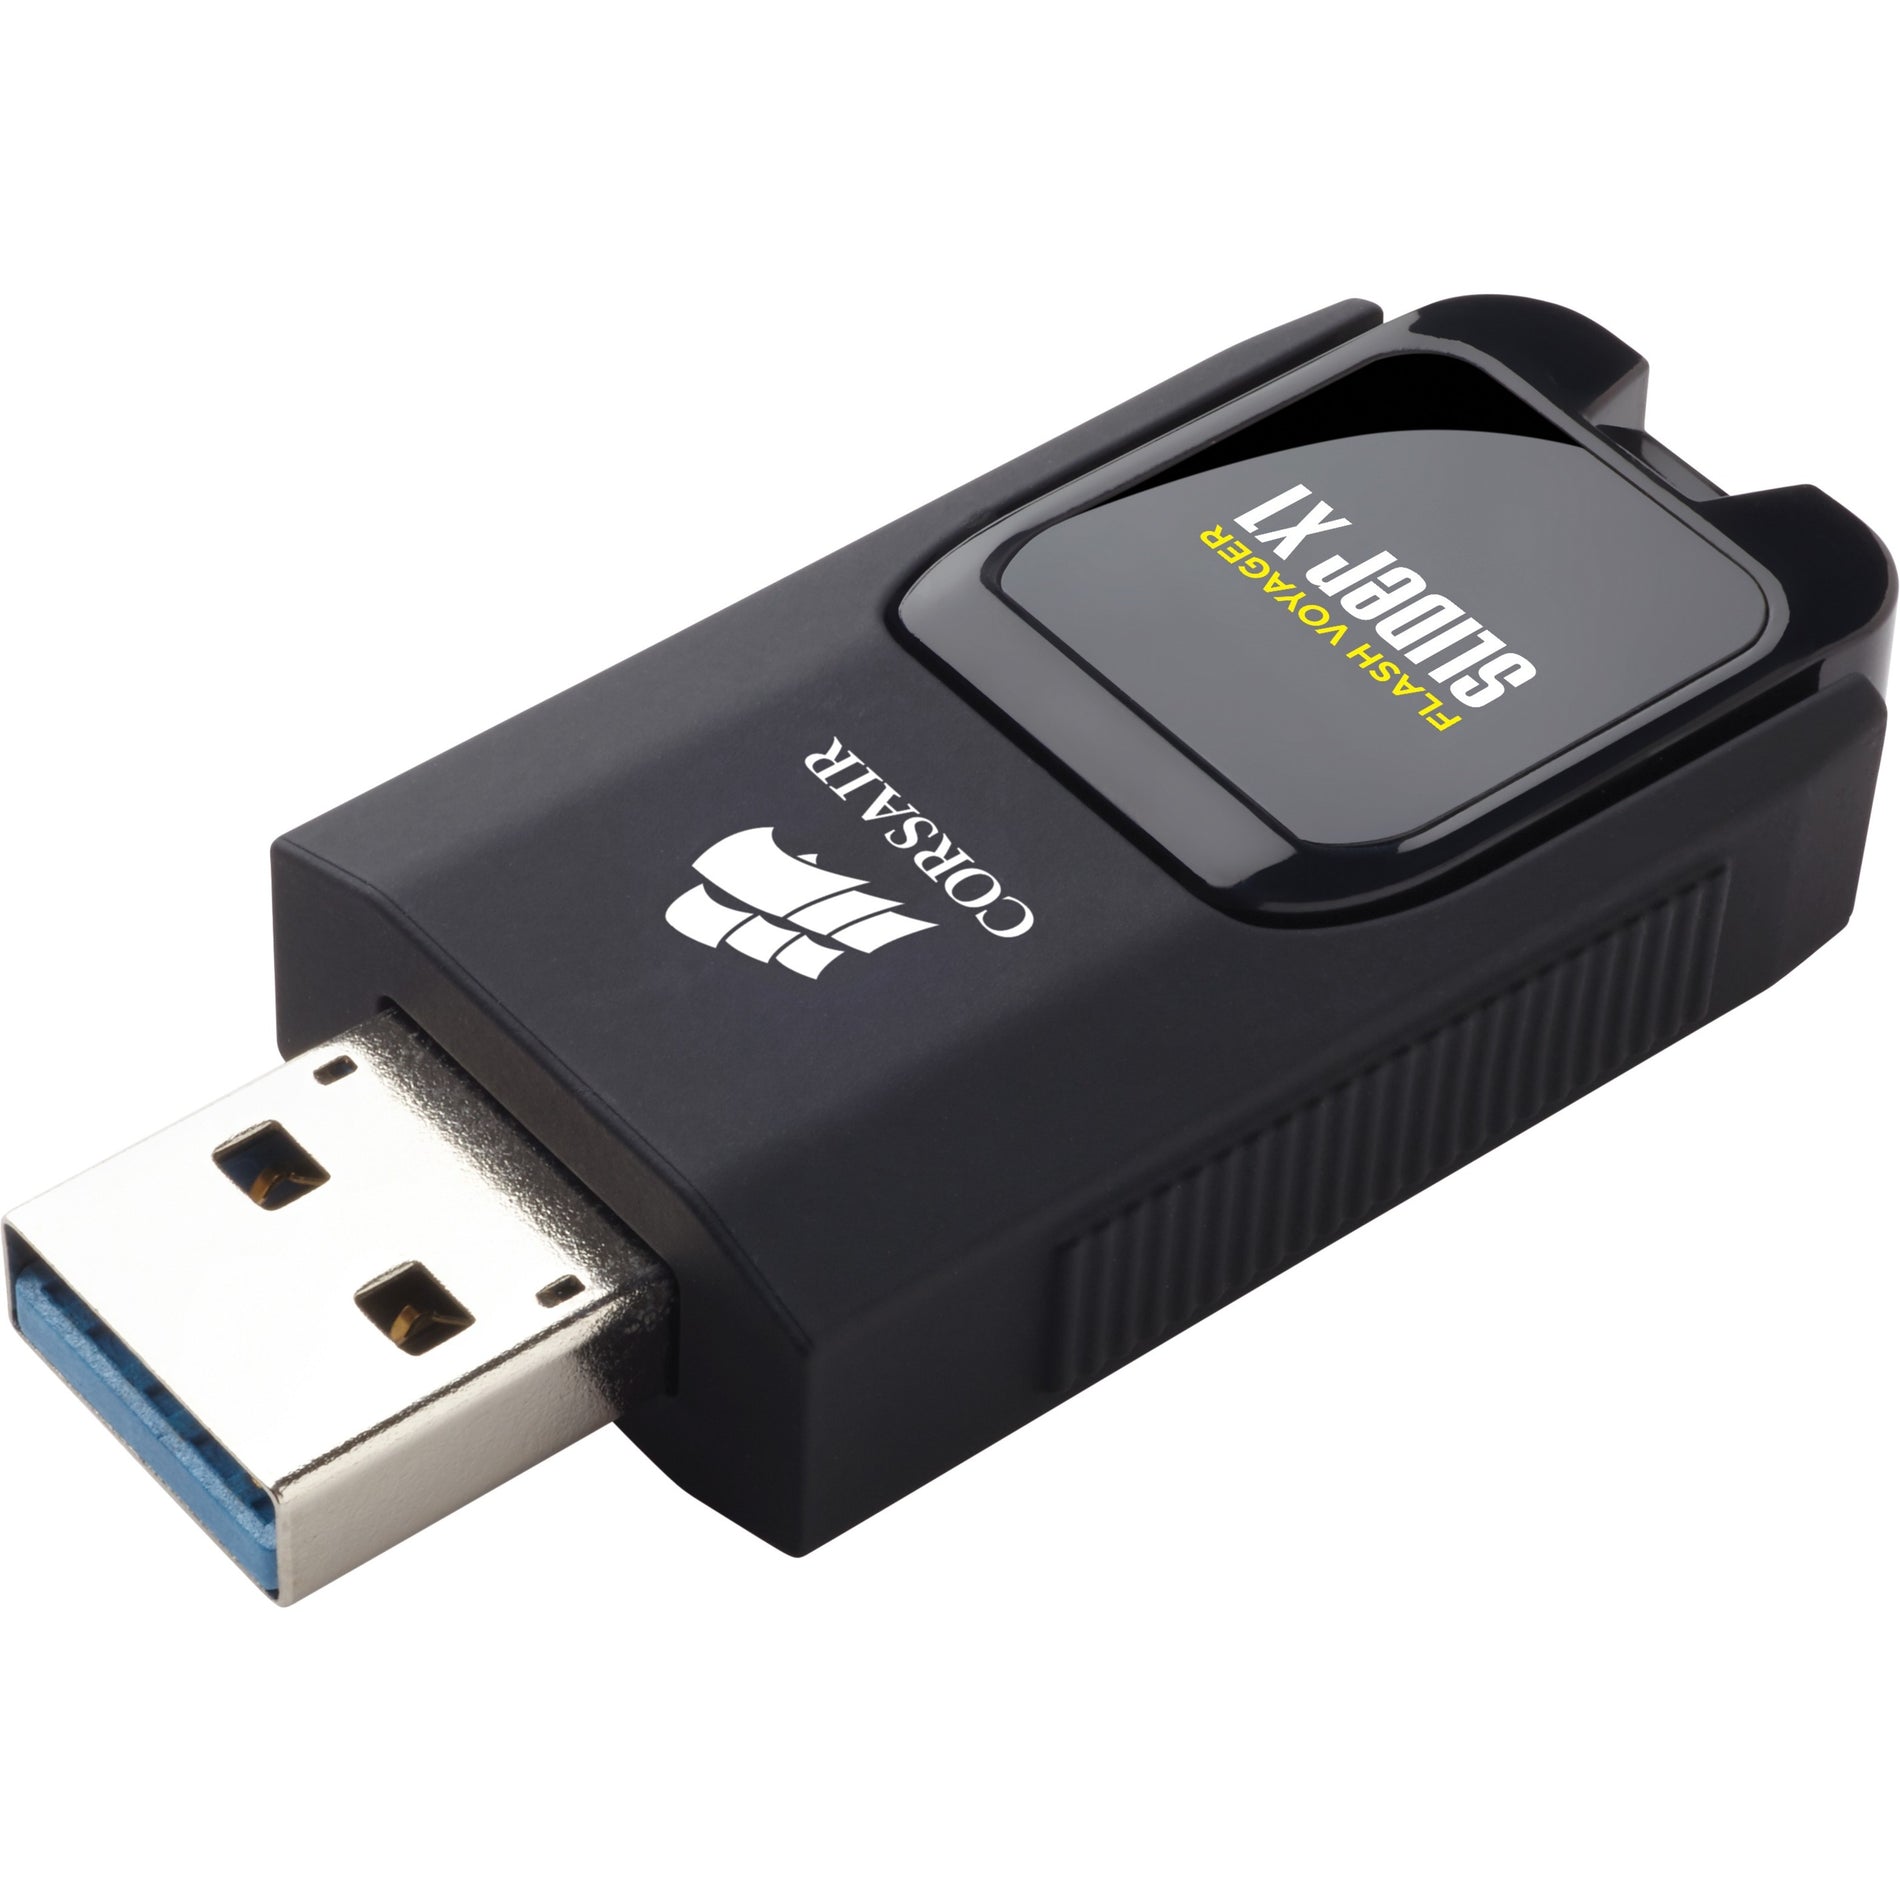 Corsair CMFSL3X1-256GB Flash Voyager Slider X1 USB 3.0 256GB USB Drive, Capless, LED Light, Retractable